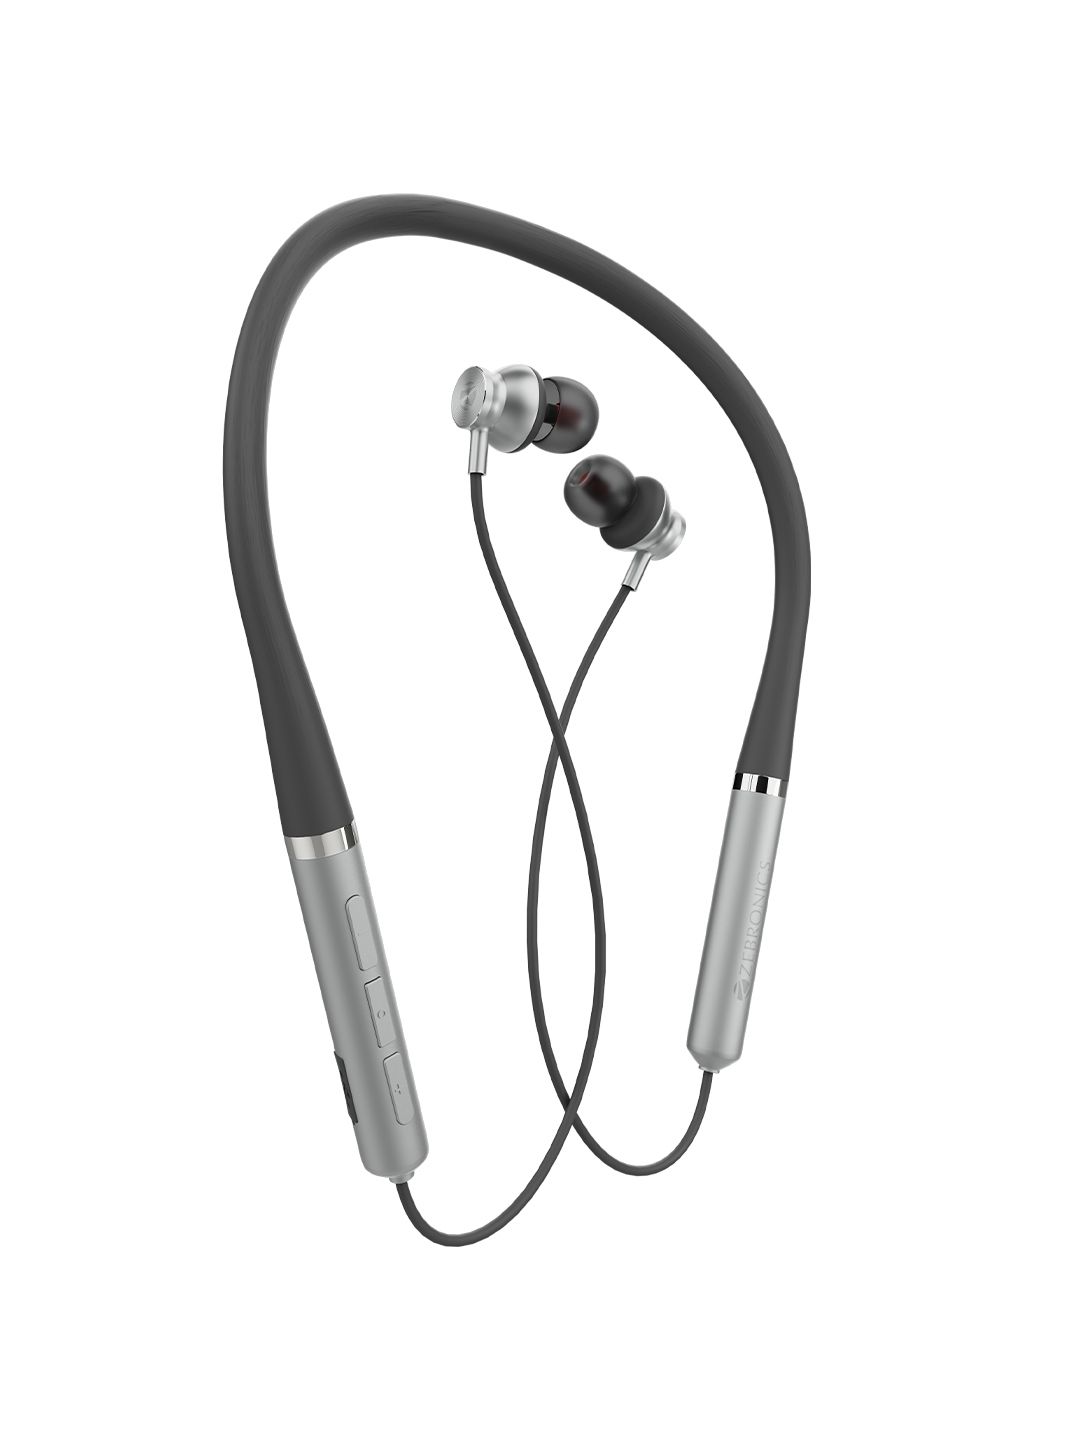 ZEBRONICS Zeb-Yoga 90 Pro Wireless Bluetooth Neckband Earphone -Grey Price in India